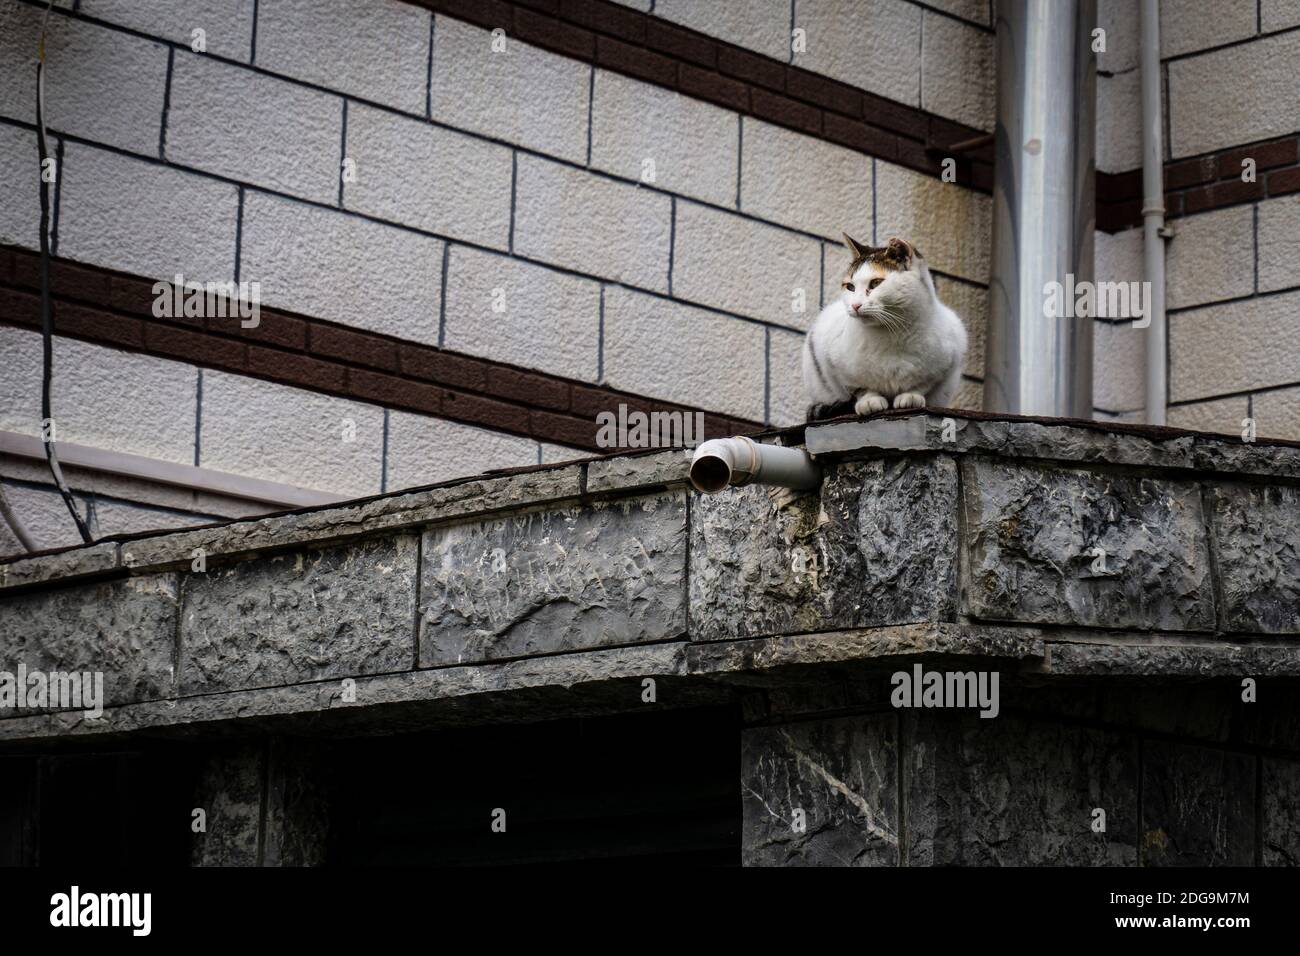 Gato blanco sentado solo junto a la mezquita. Gato descansando con backround decorativo. Pendik, İstanbul Foto de stock